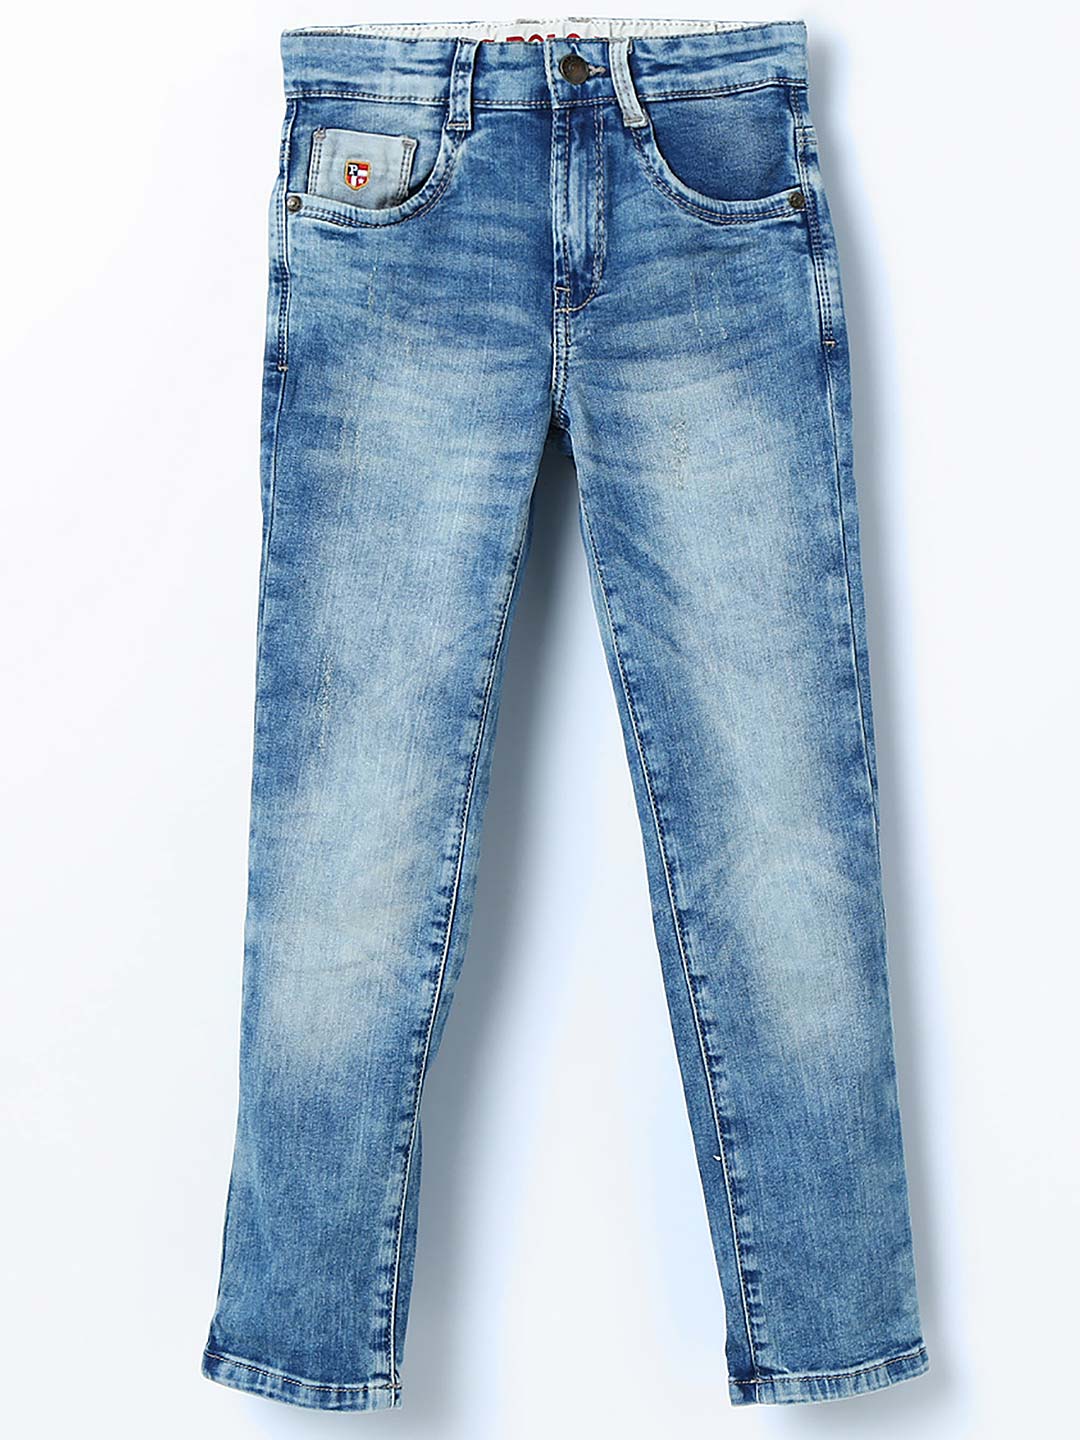 polo jeans